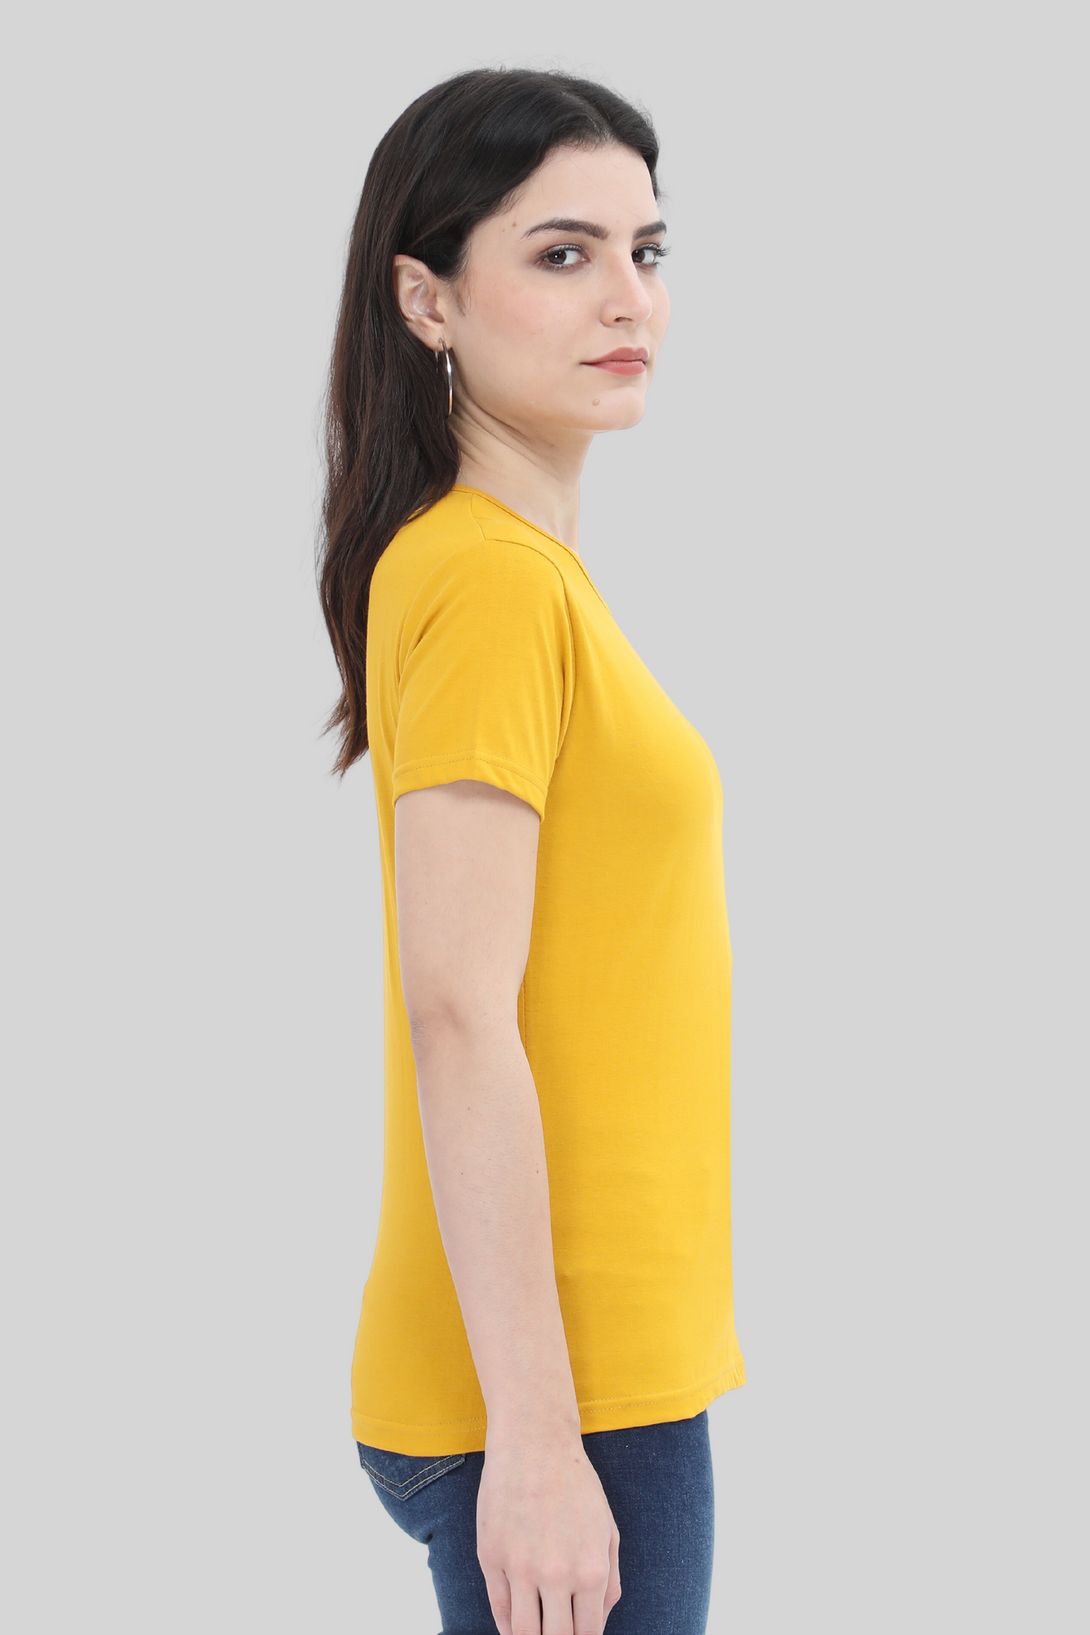 Mustard Yellow Scoop Neck T-Shirt For Women - WowWaves